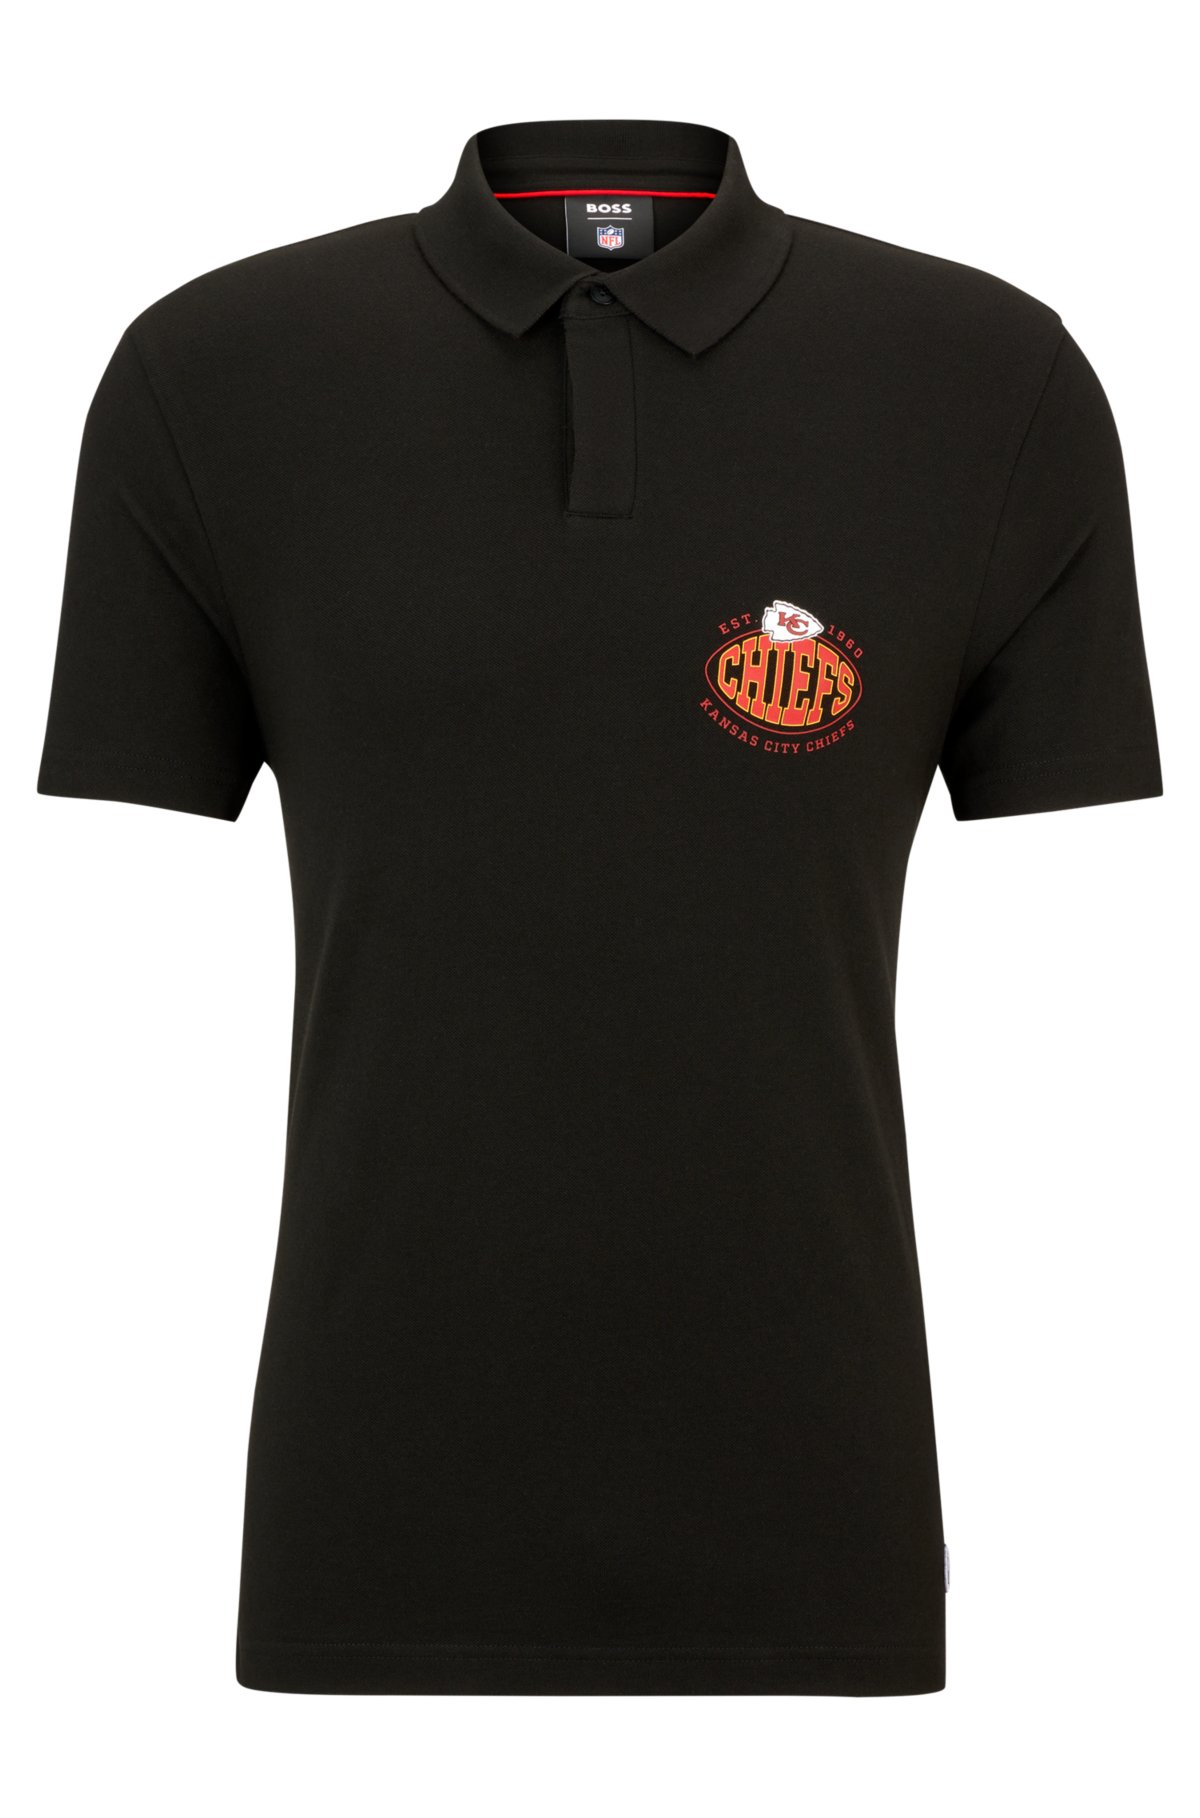 BOSS x NFL cotton-piqué polo shirt with collaborative branding, Chiefs